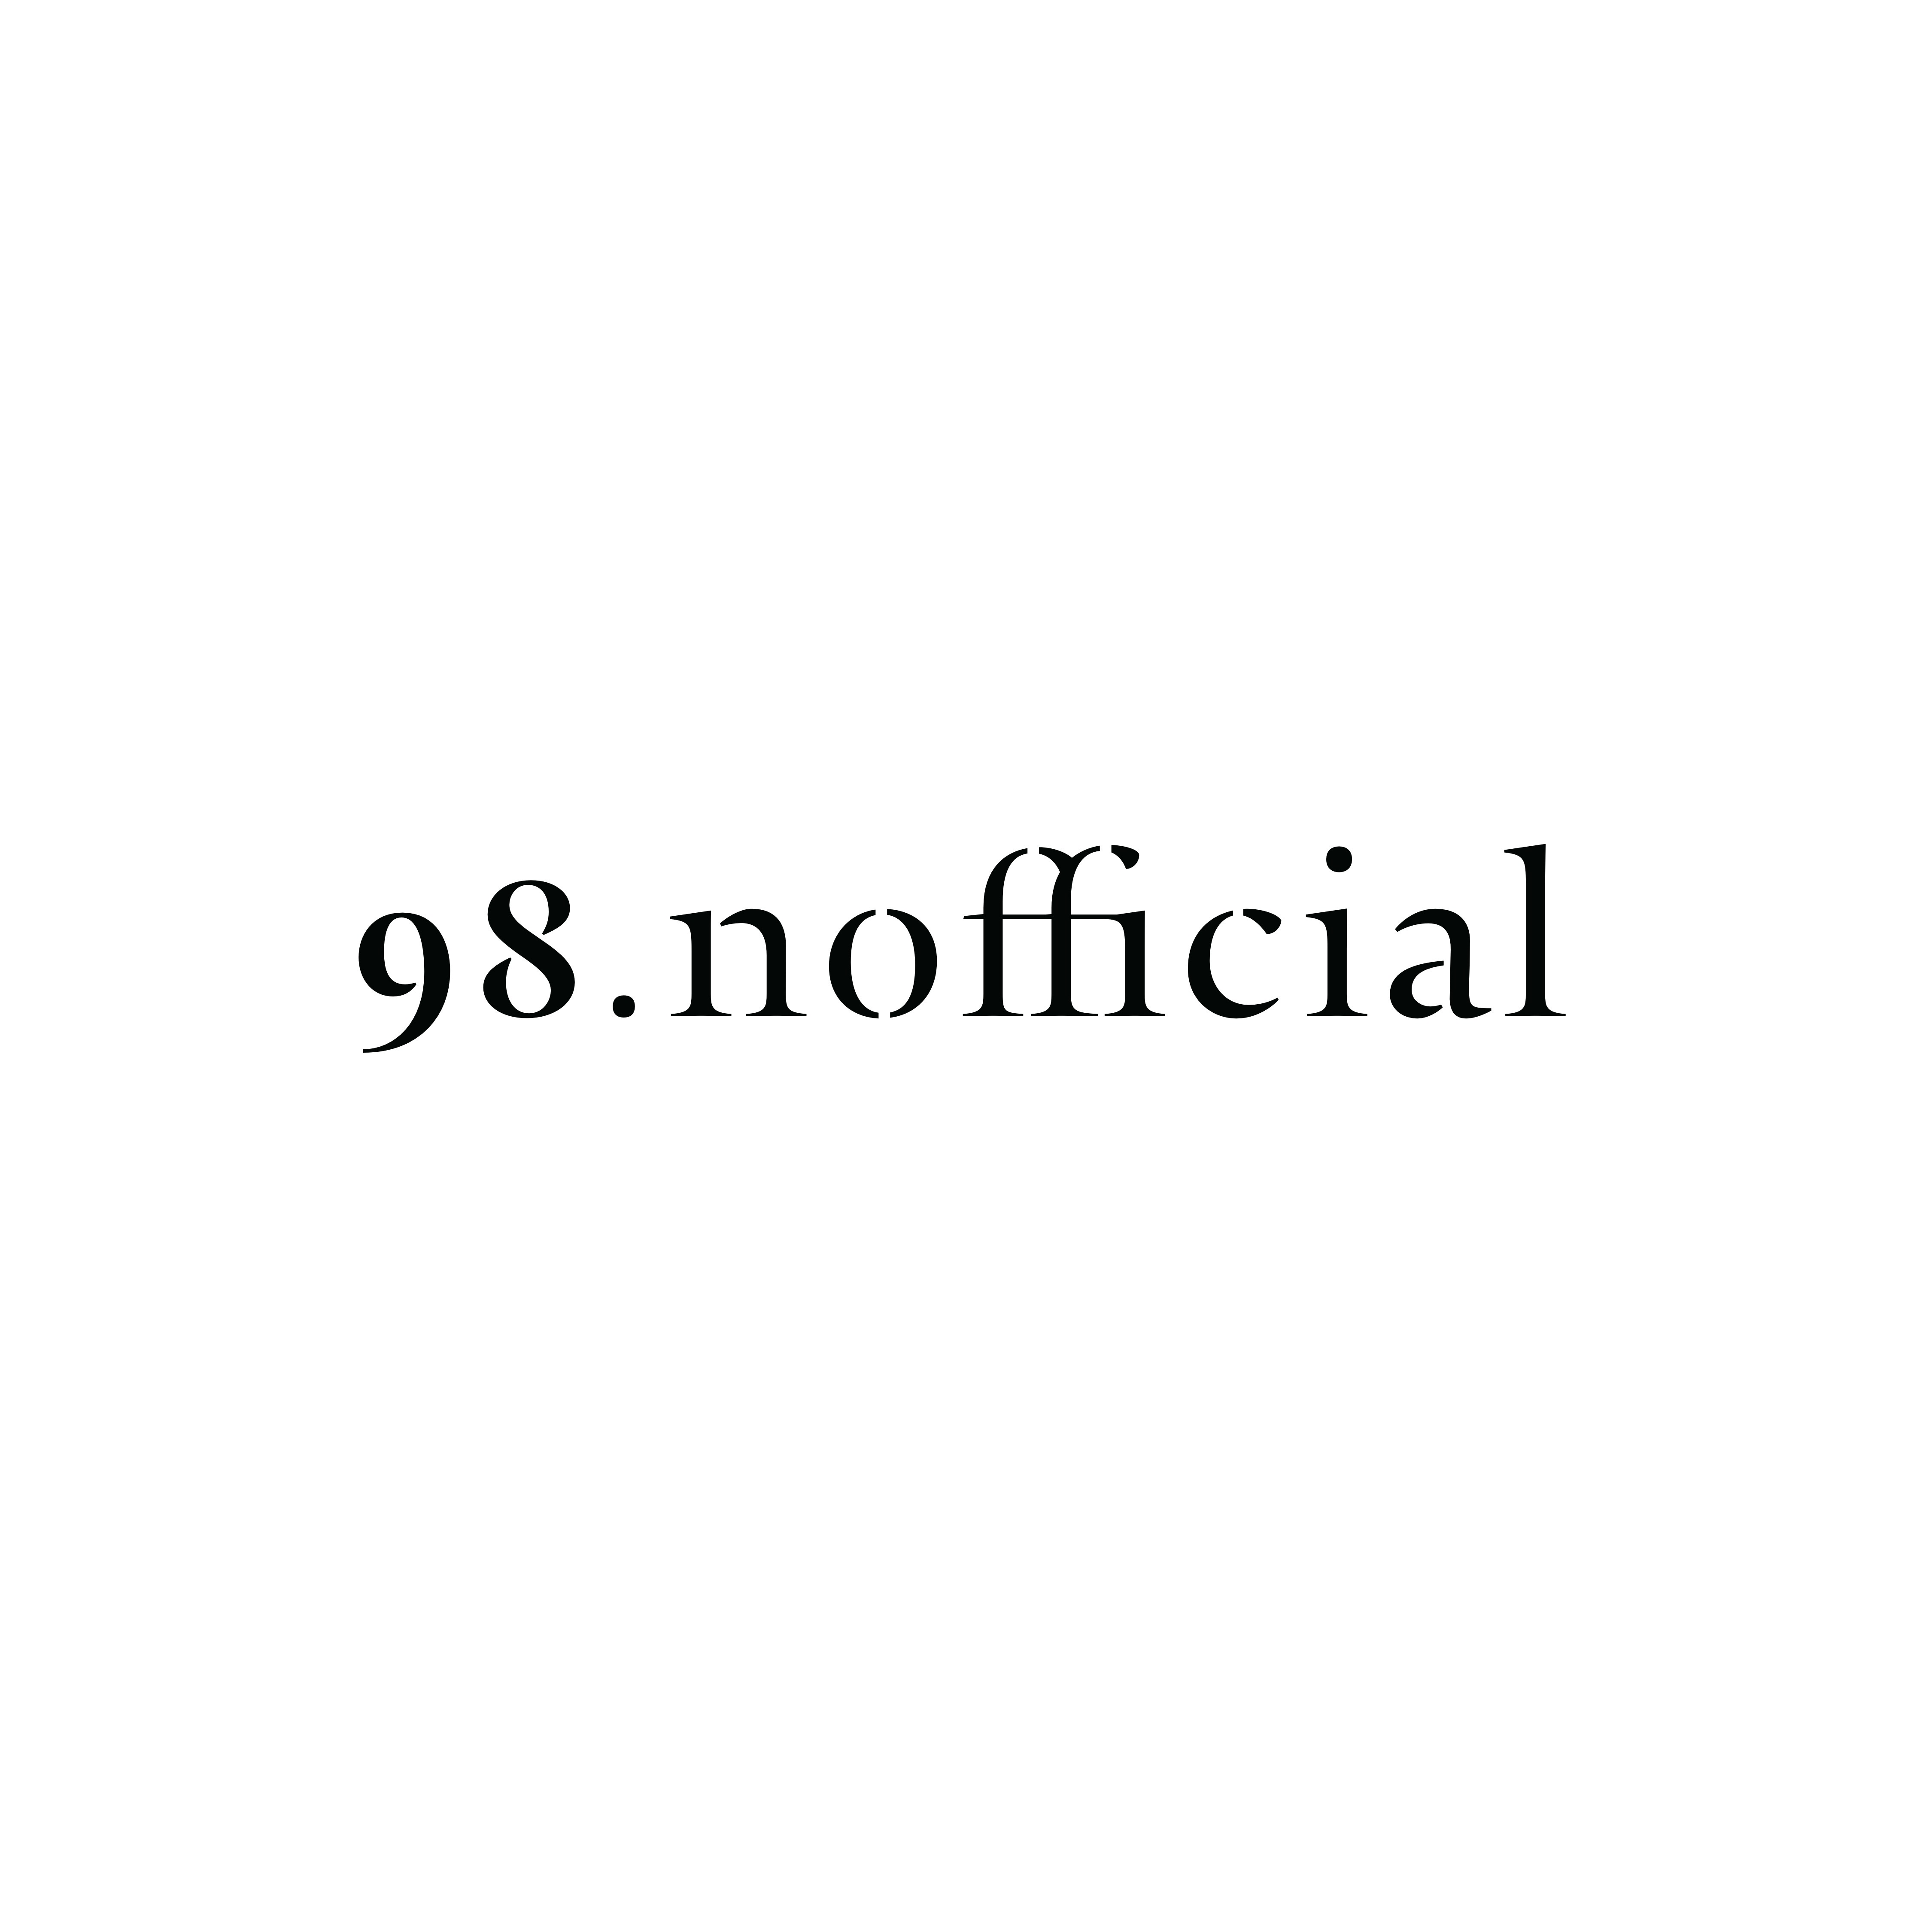 98.nofficial